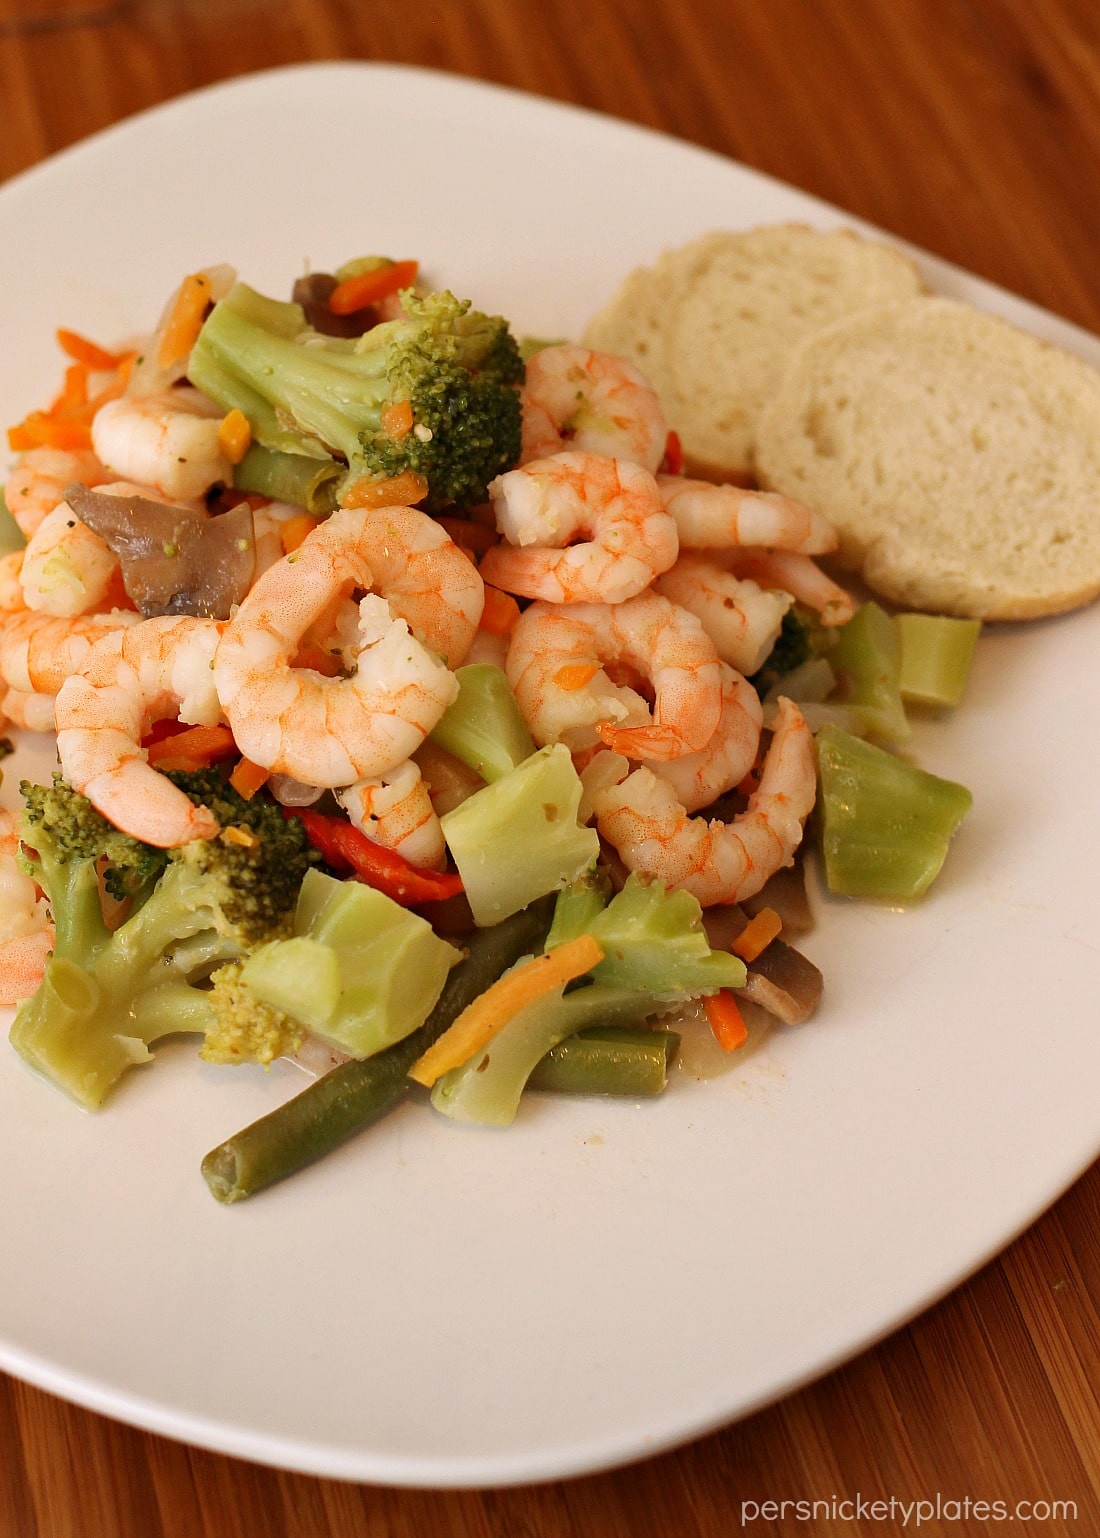 Italian Shrimp Stir Fry | Persnickety Plates #SamsClubSeafood